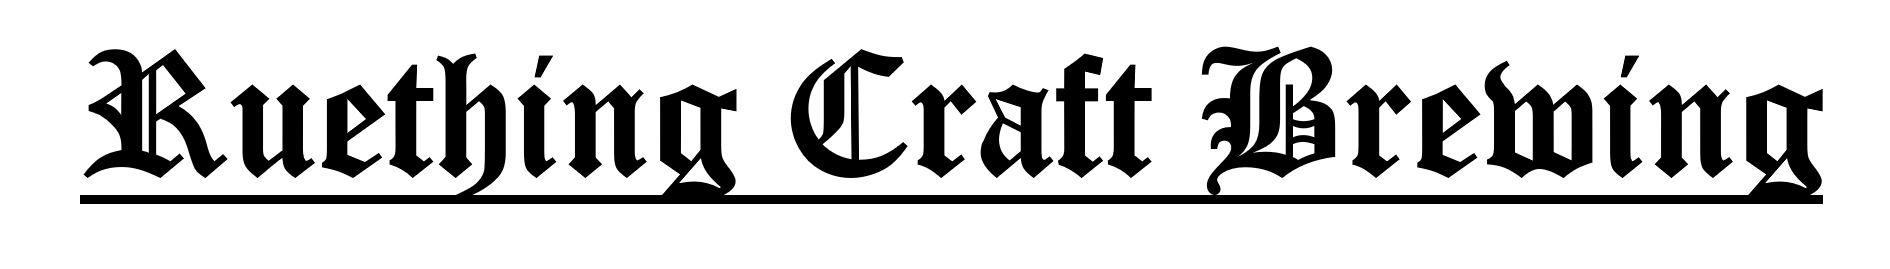 Ruething Craft Brewing Corporation Script